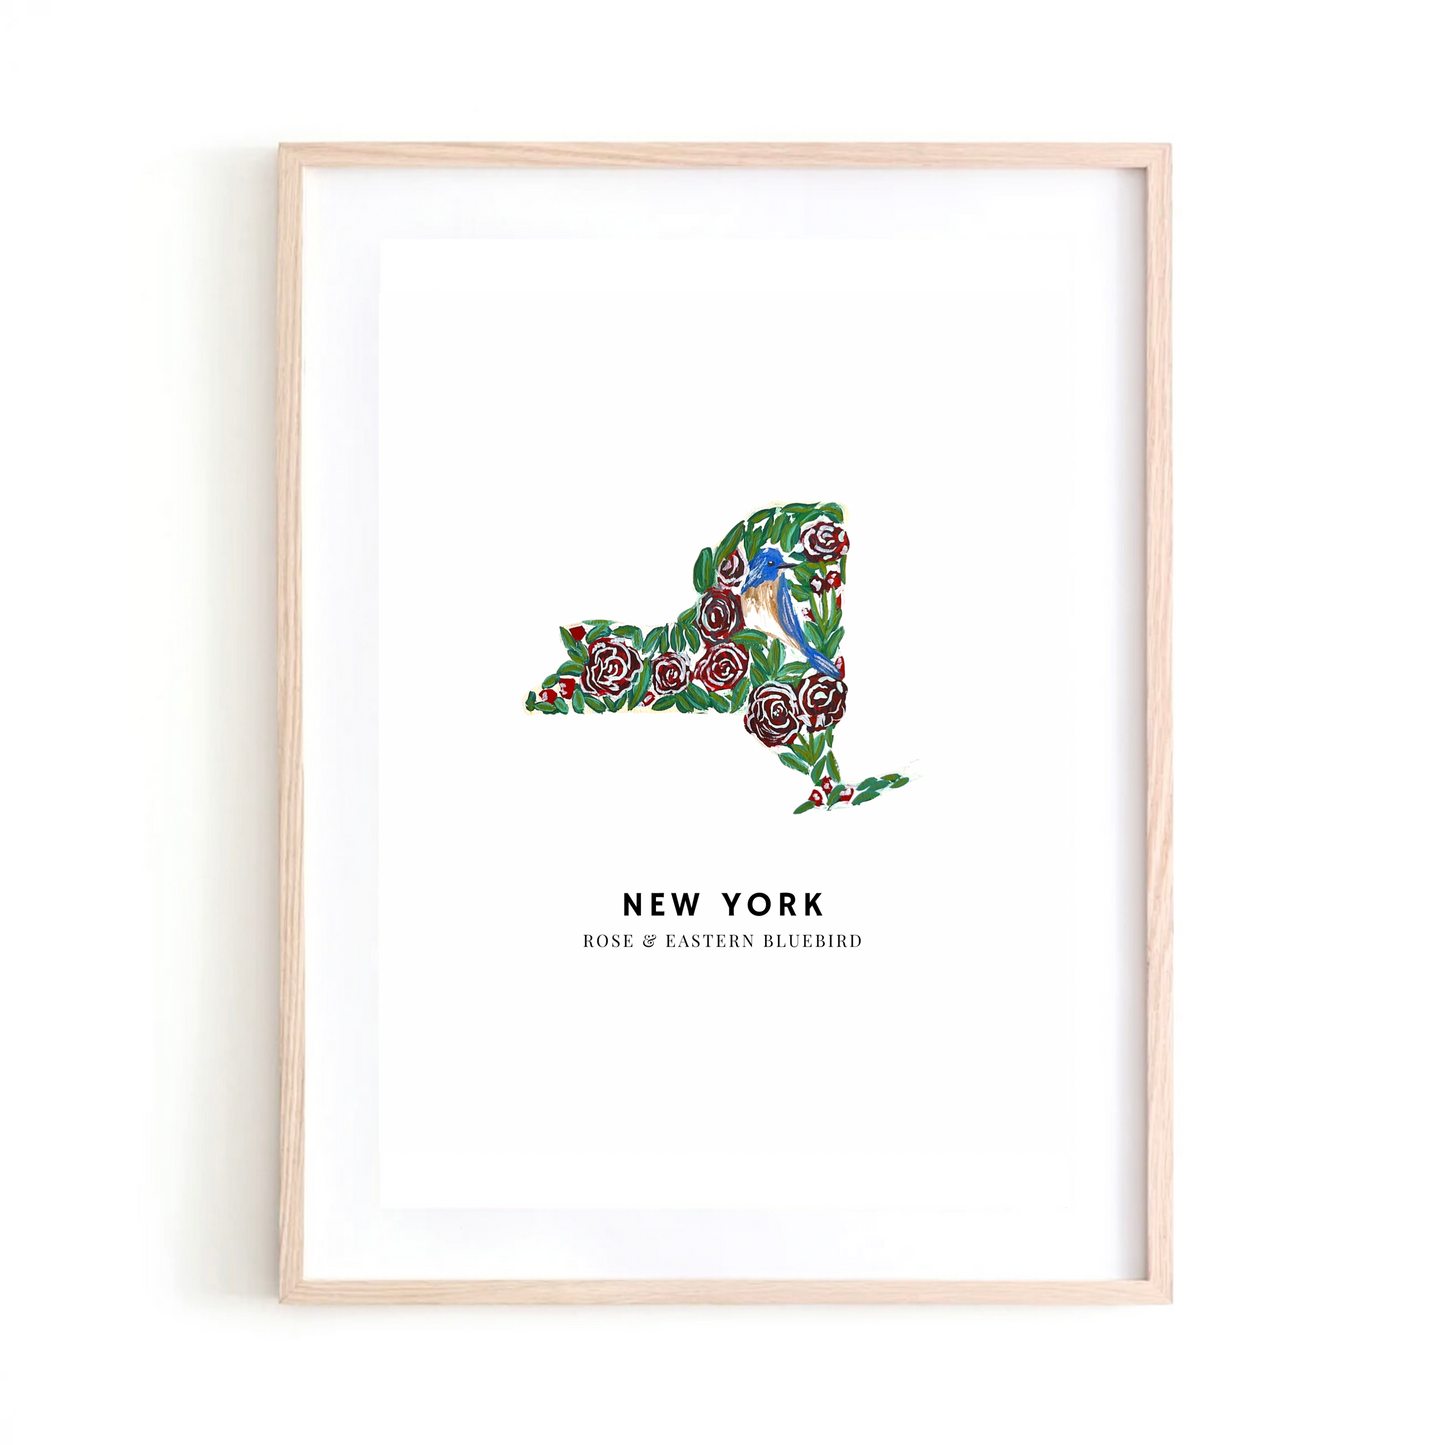 New York State & Eastern Bluebird art print